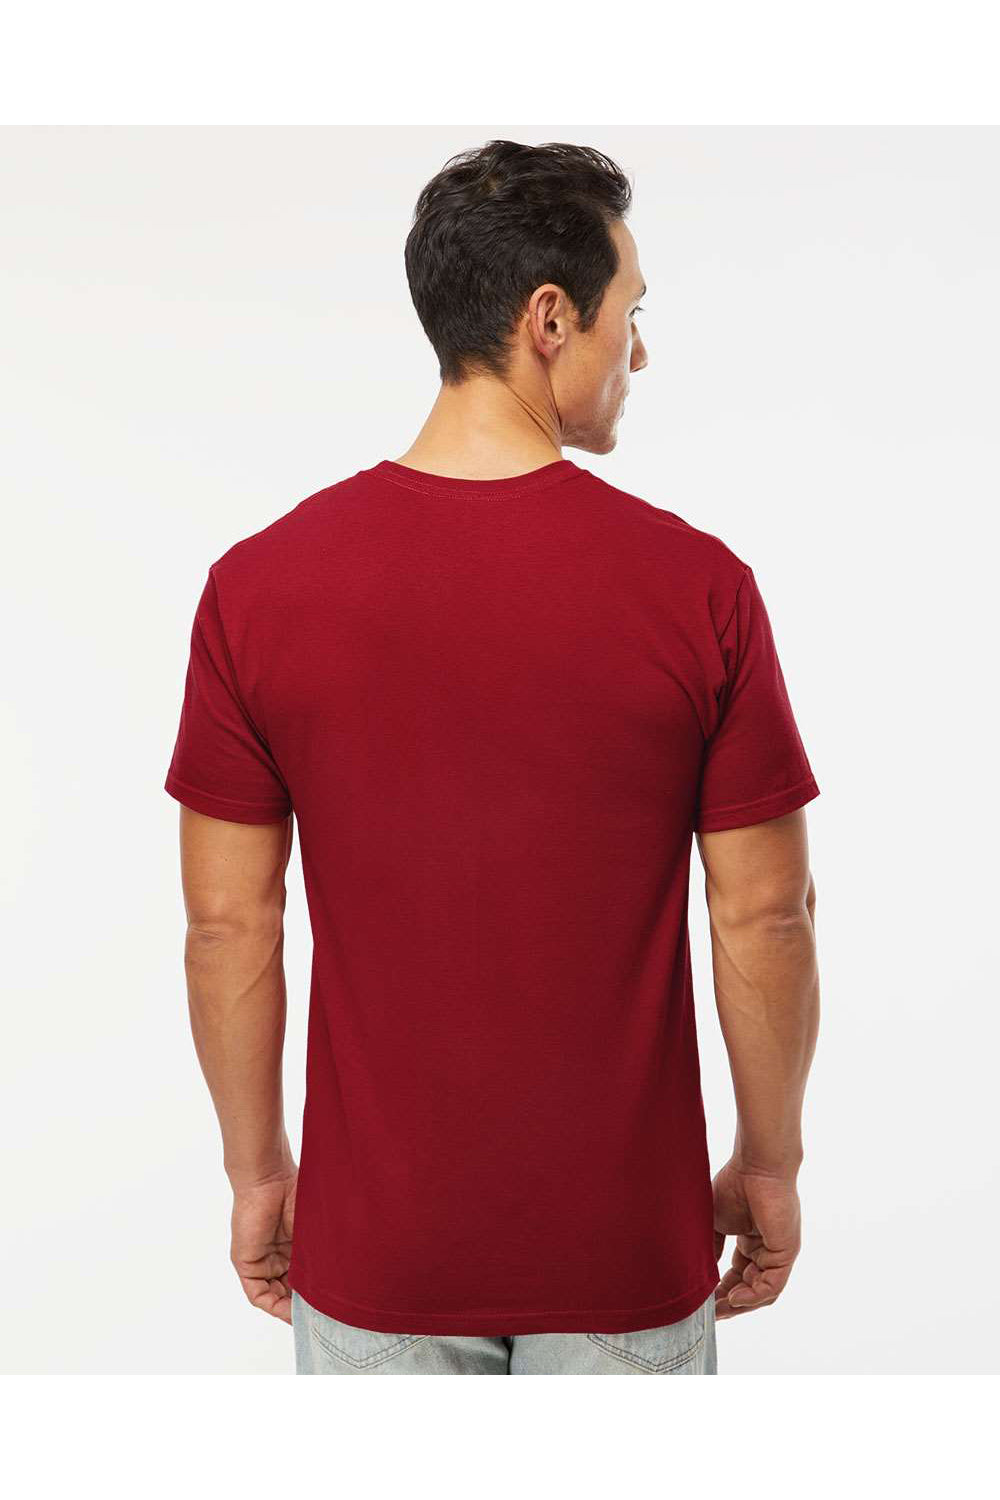 M&O 4800 Mens Gold Soft Touch Short Sleeve Crewneck T-Shirt Cardinal Red Model Back